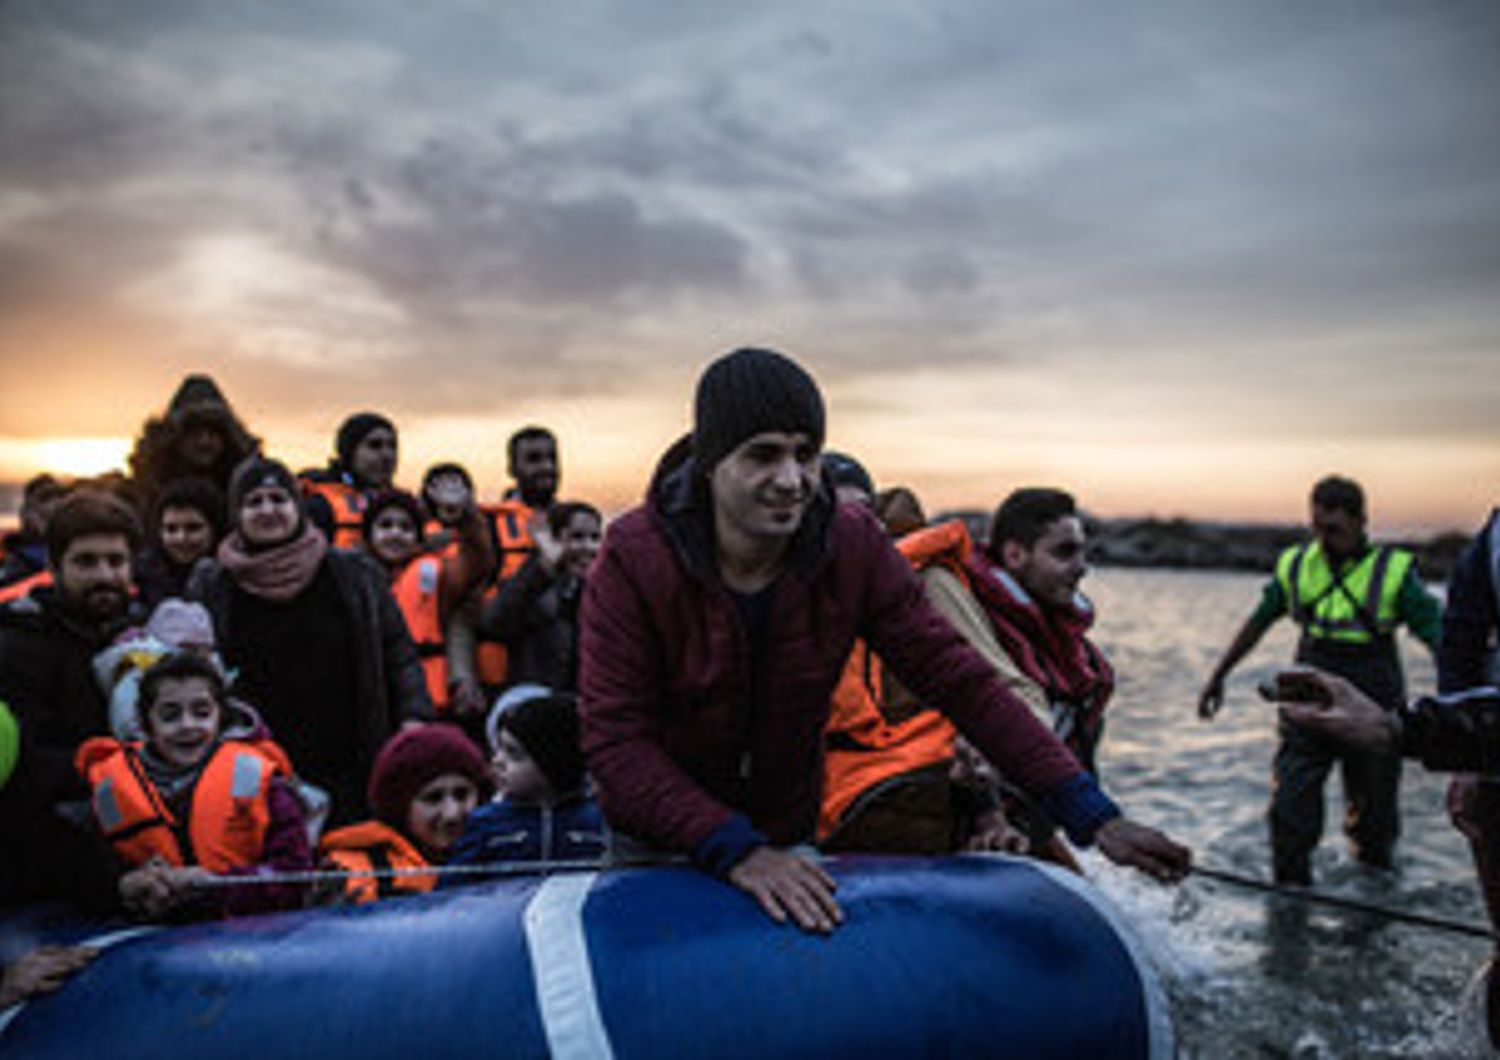 &nbsp; Accordo Ue-Turchia, migranti entrati irregolarmente saranno rimpatriati&nbsp;(foto Pablo Tosco, Oxfam)